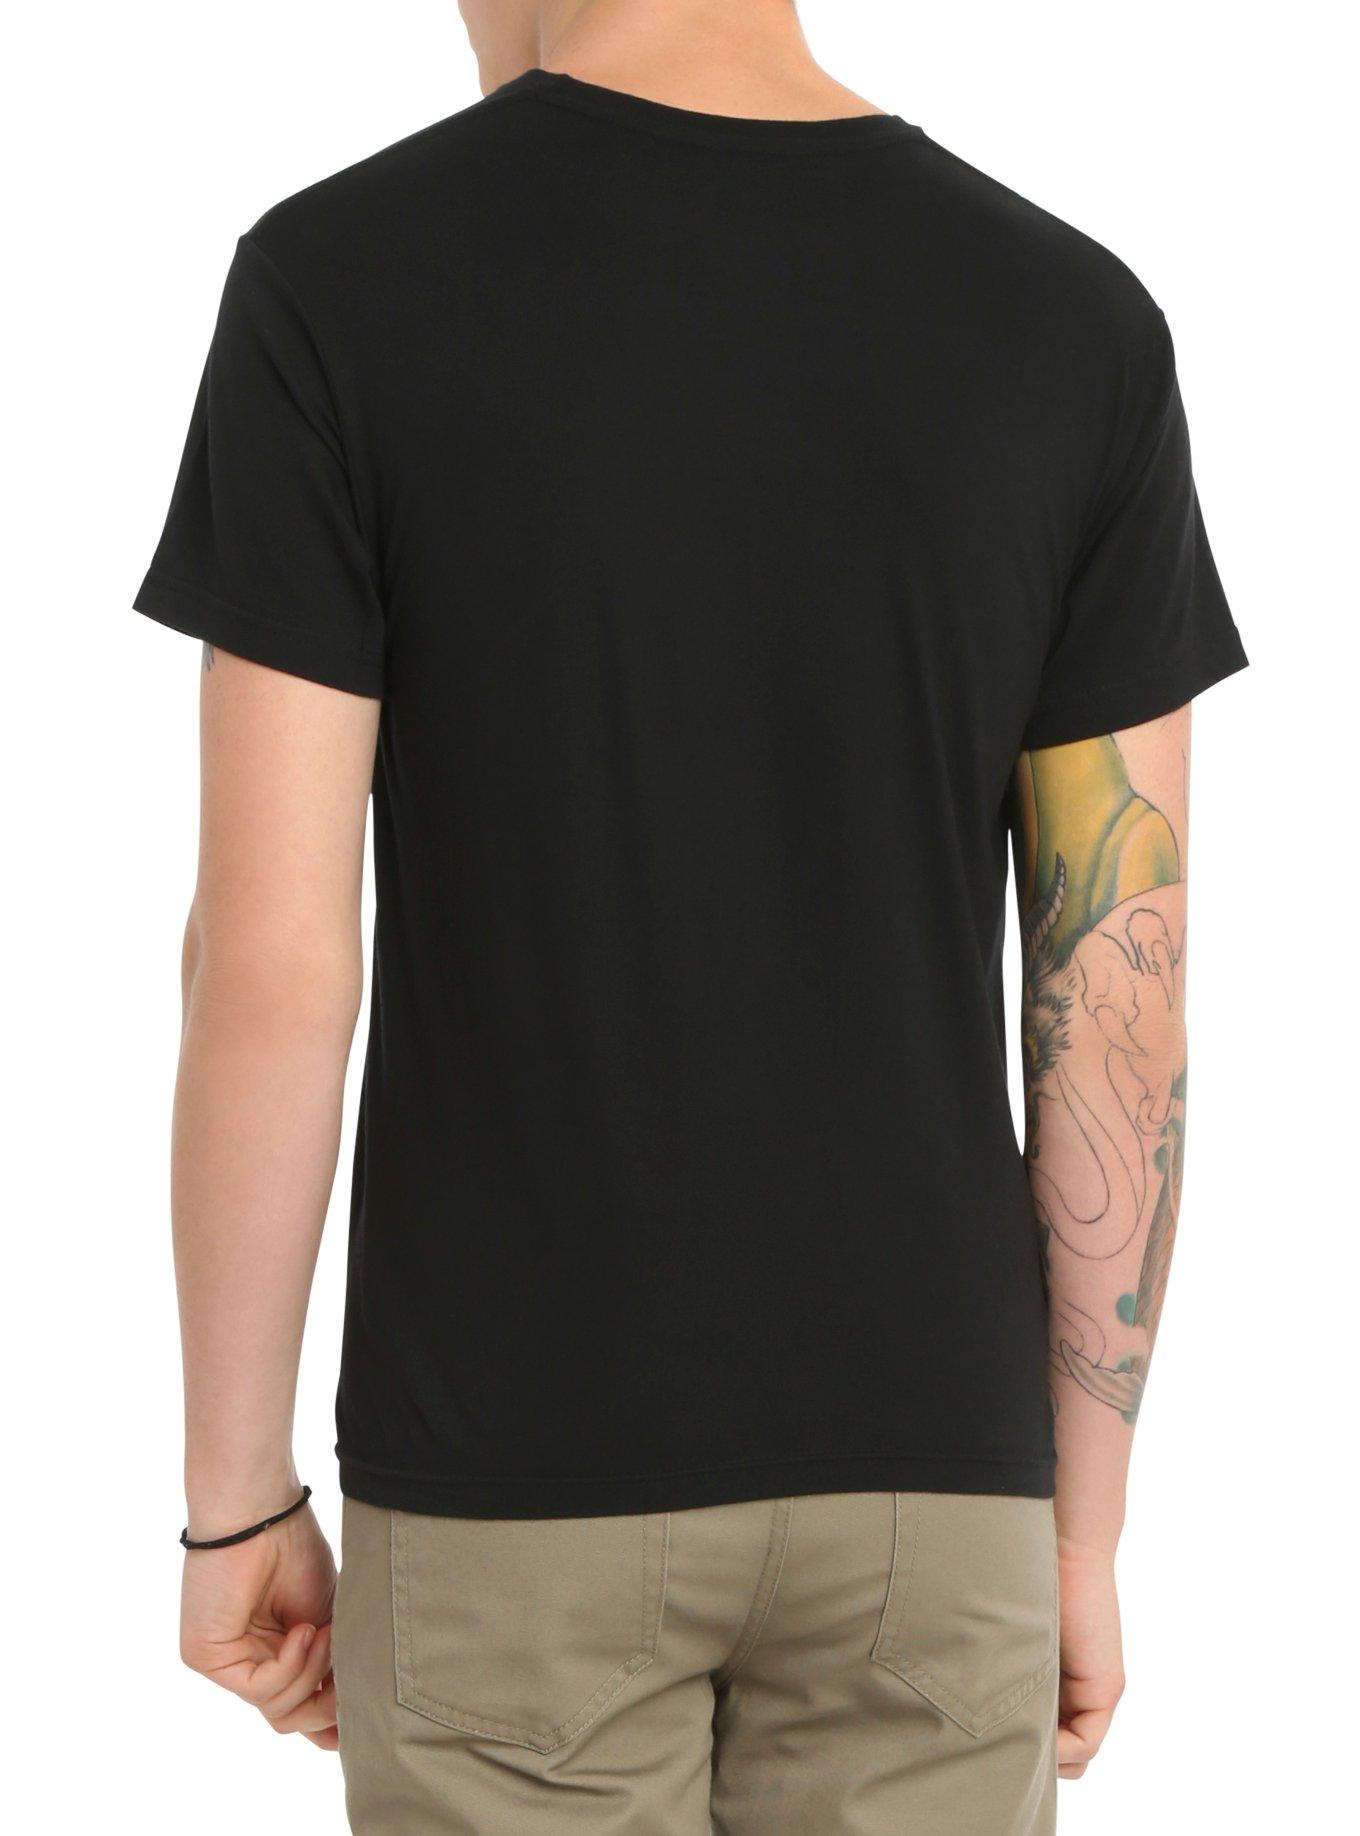 Minions Villain-Con T-Shirt, BLACK, alternate